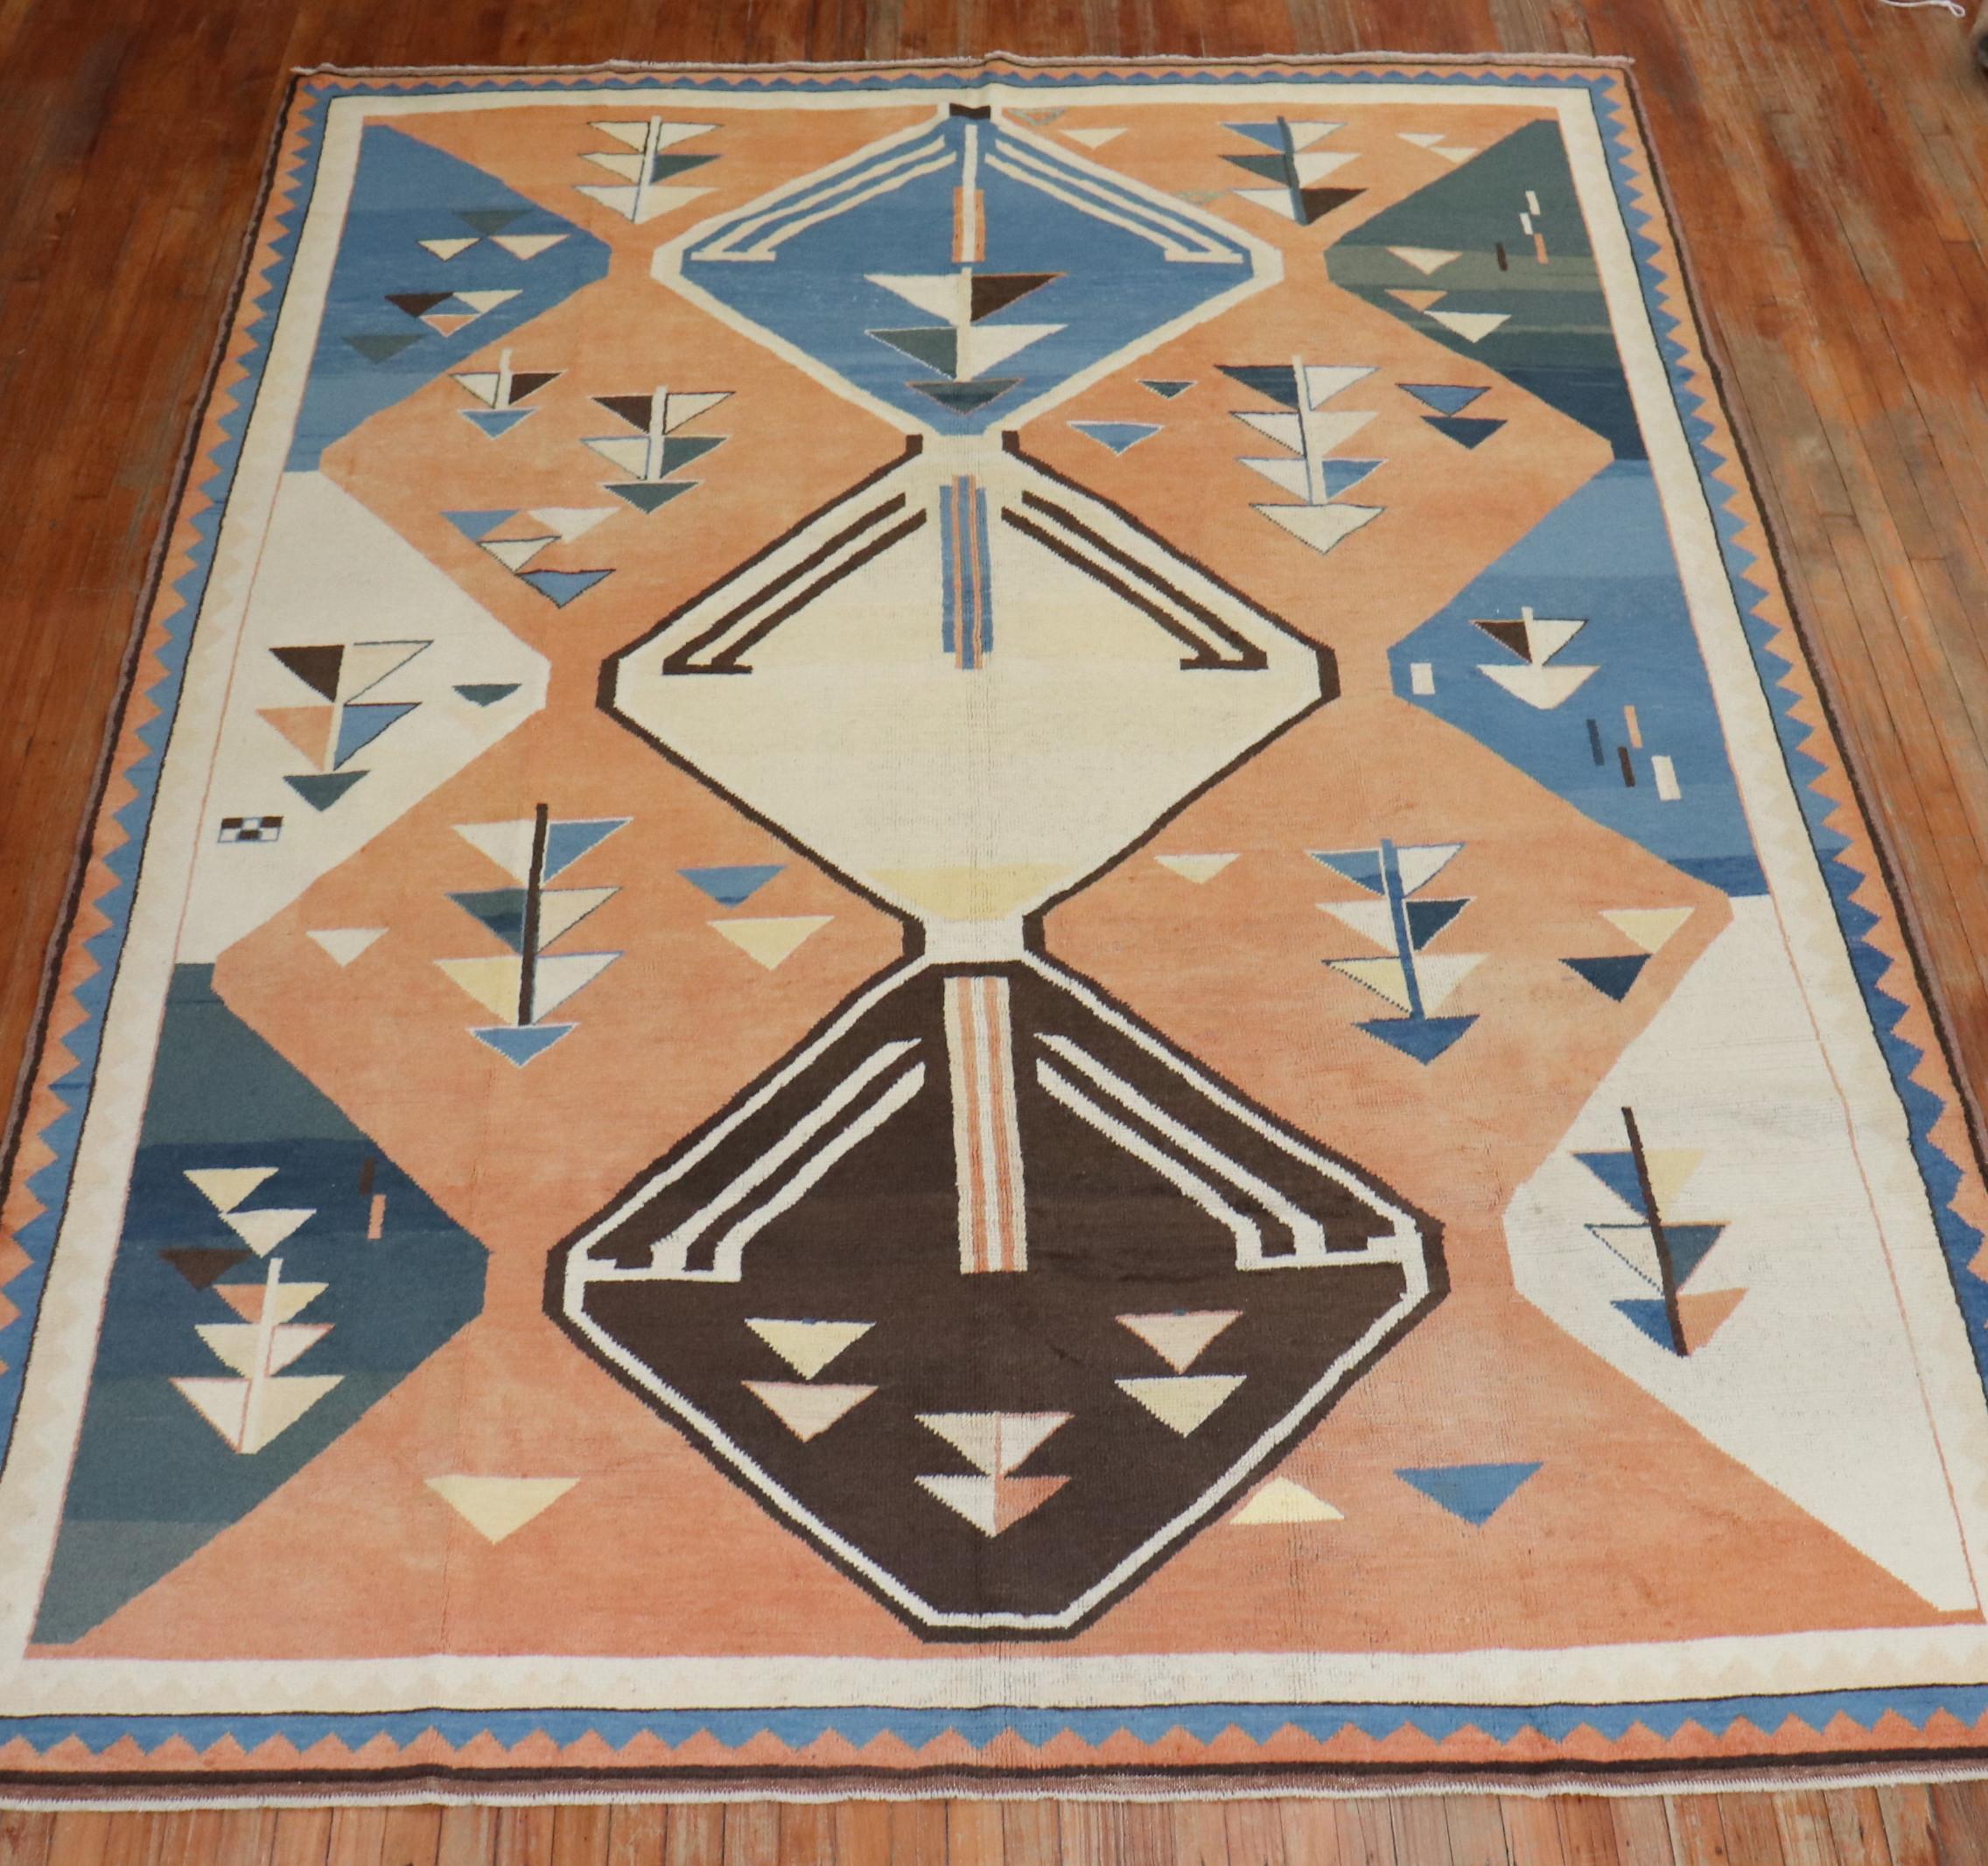 Abstract 20th Century Turkish Geometric Deco Persian Gabbeh Inspired Carpet 3